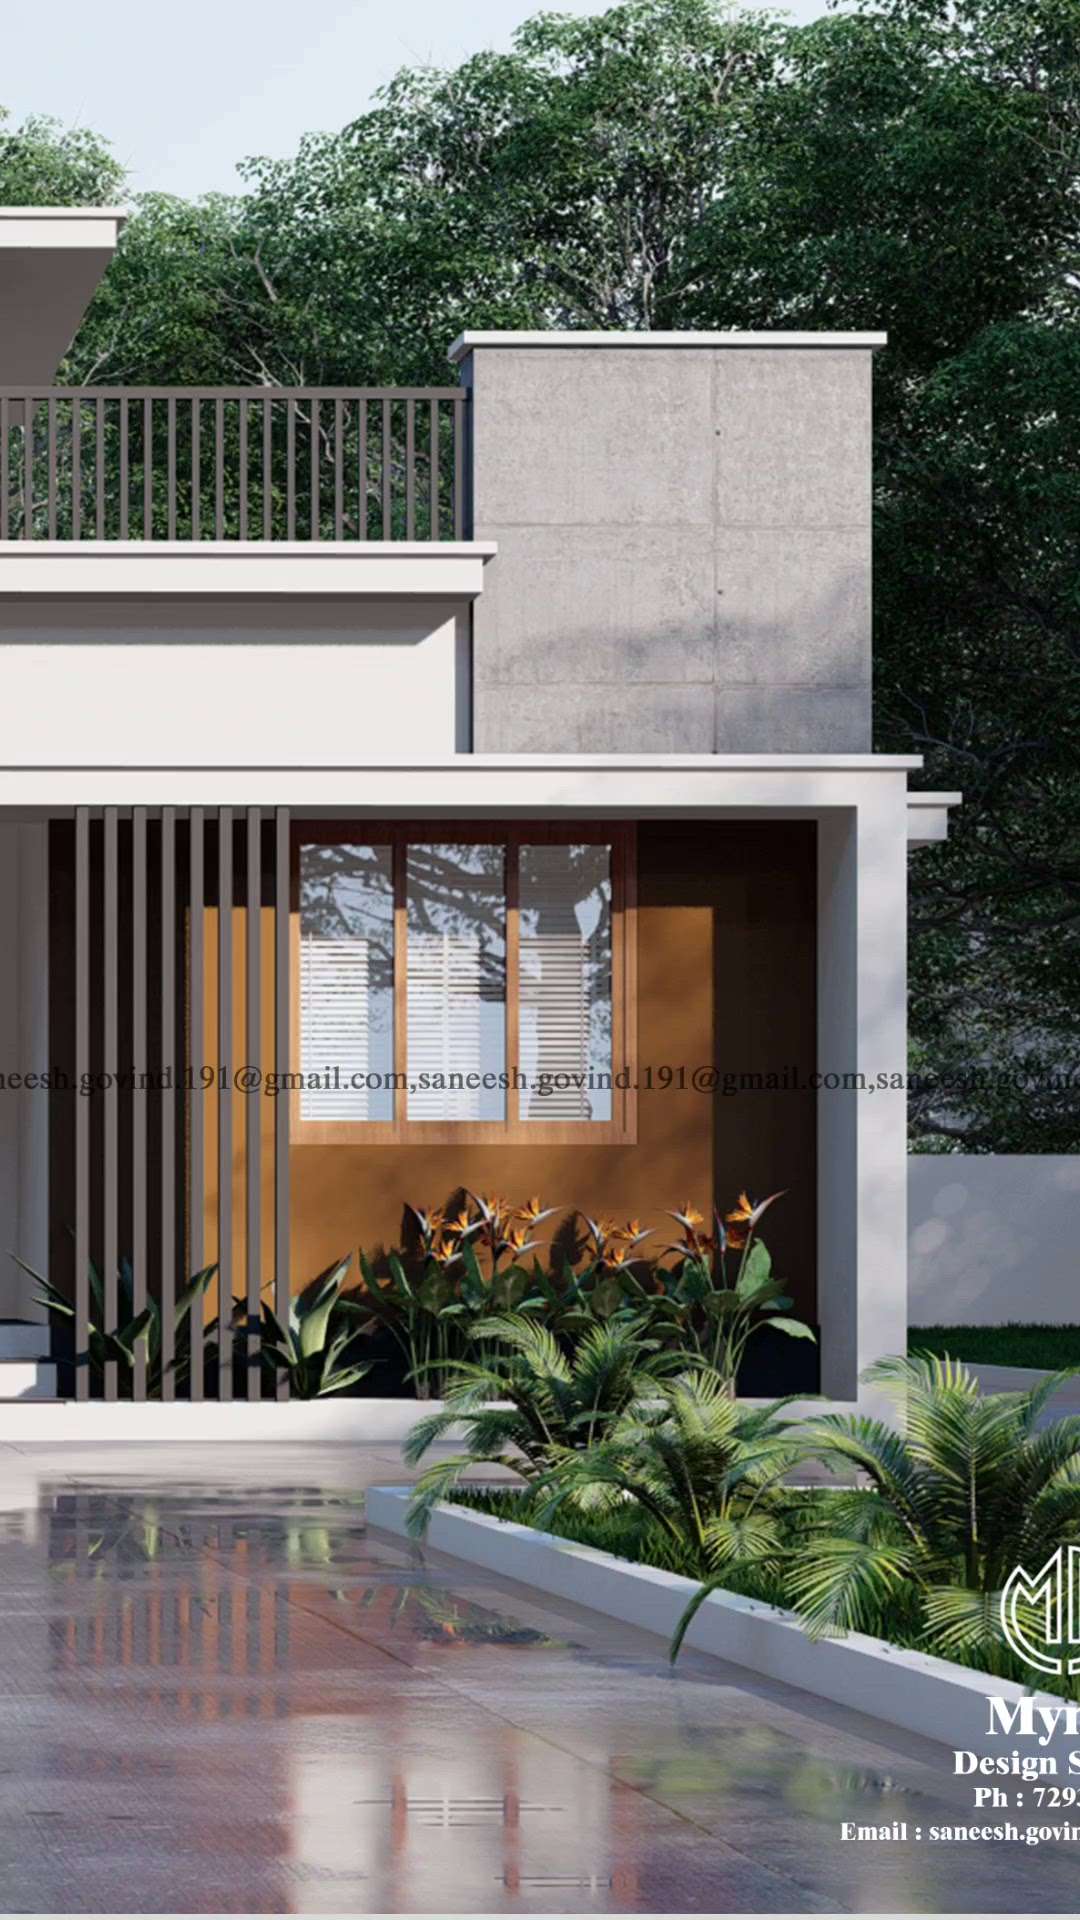 1100 sqft
client:Sandeep
#KeralaStyleHouse
 #keralaarchitectures
 #veedudesign
 #architecturedesigns